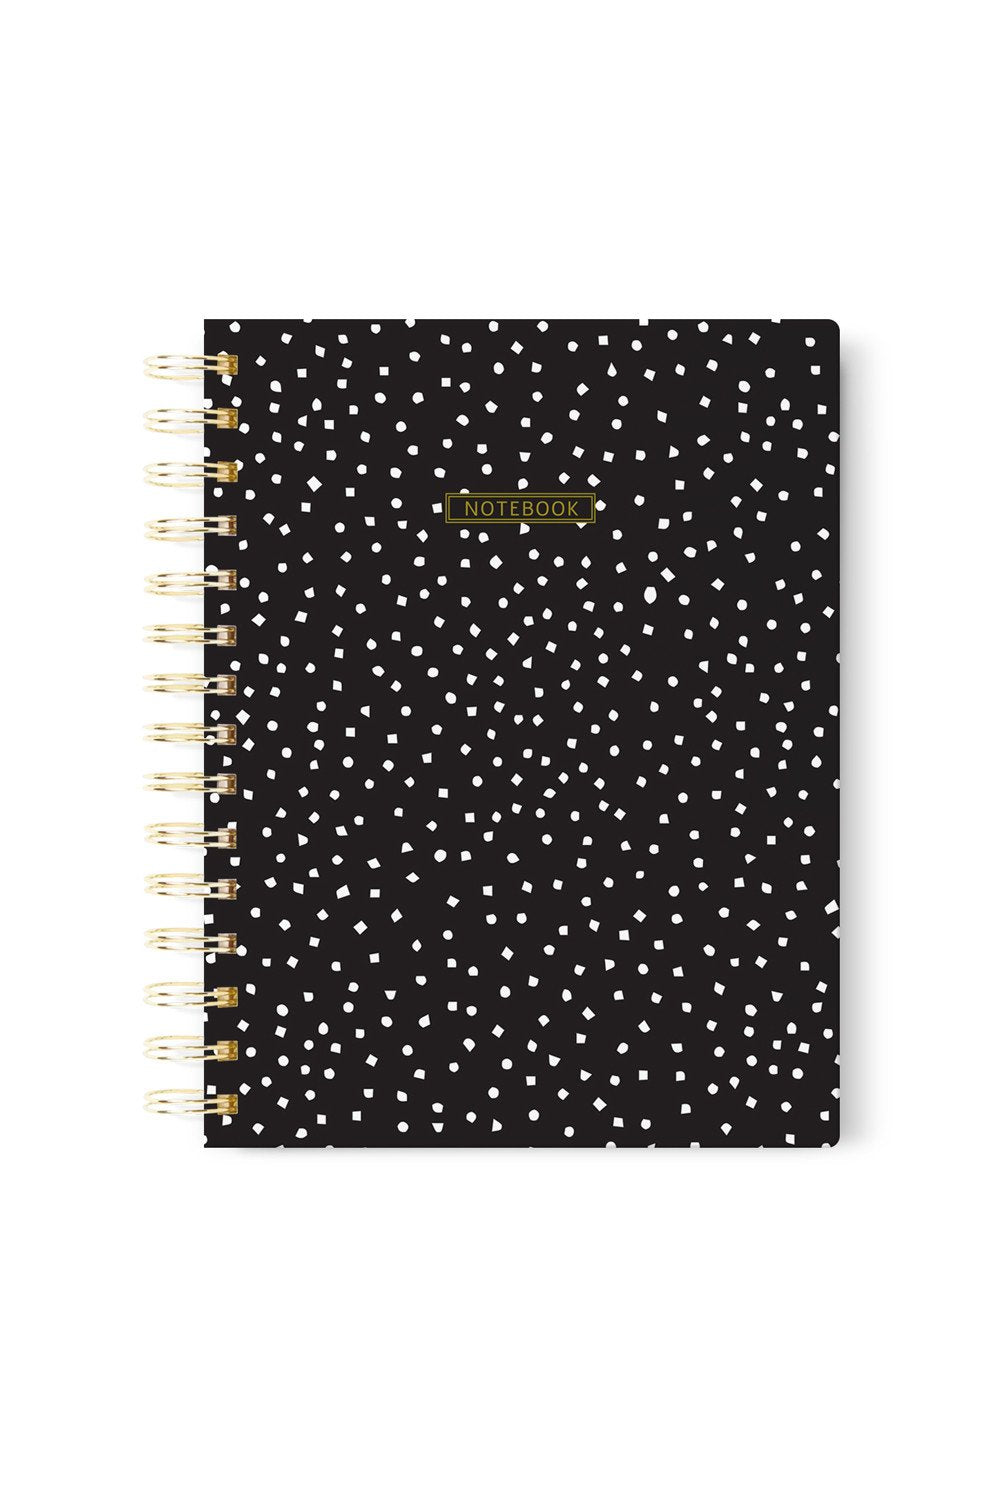 Spiral Notebook - Black and White confetti